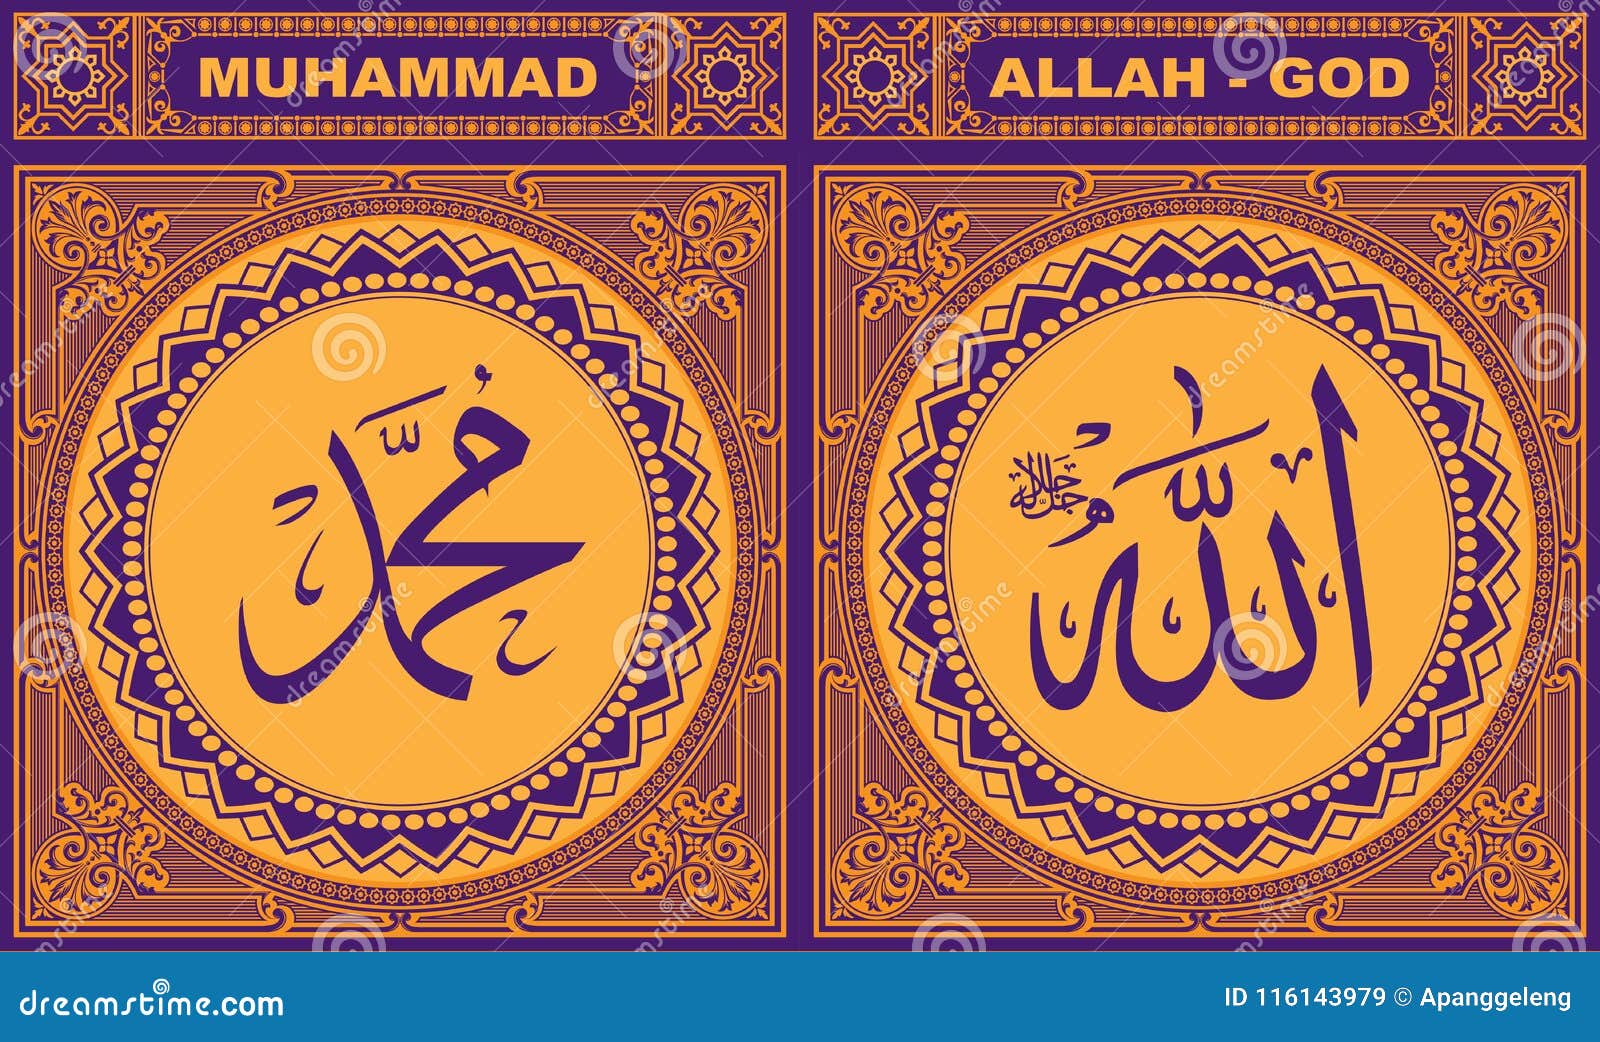 allah & muhammad arabic calligraphy with round orange frame